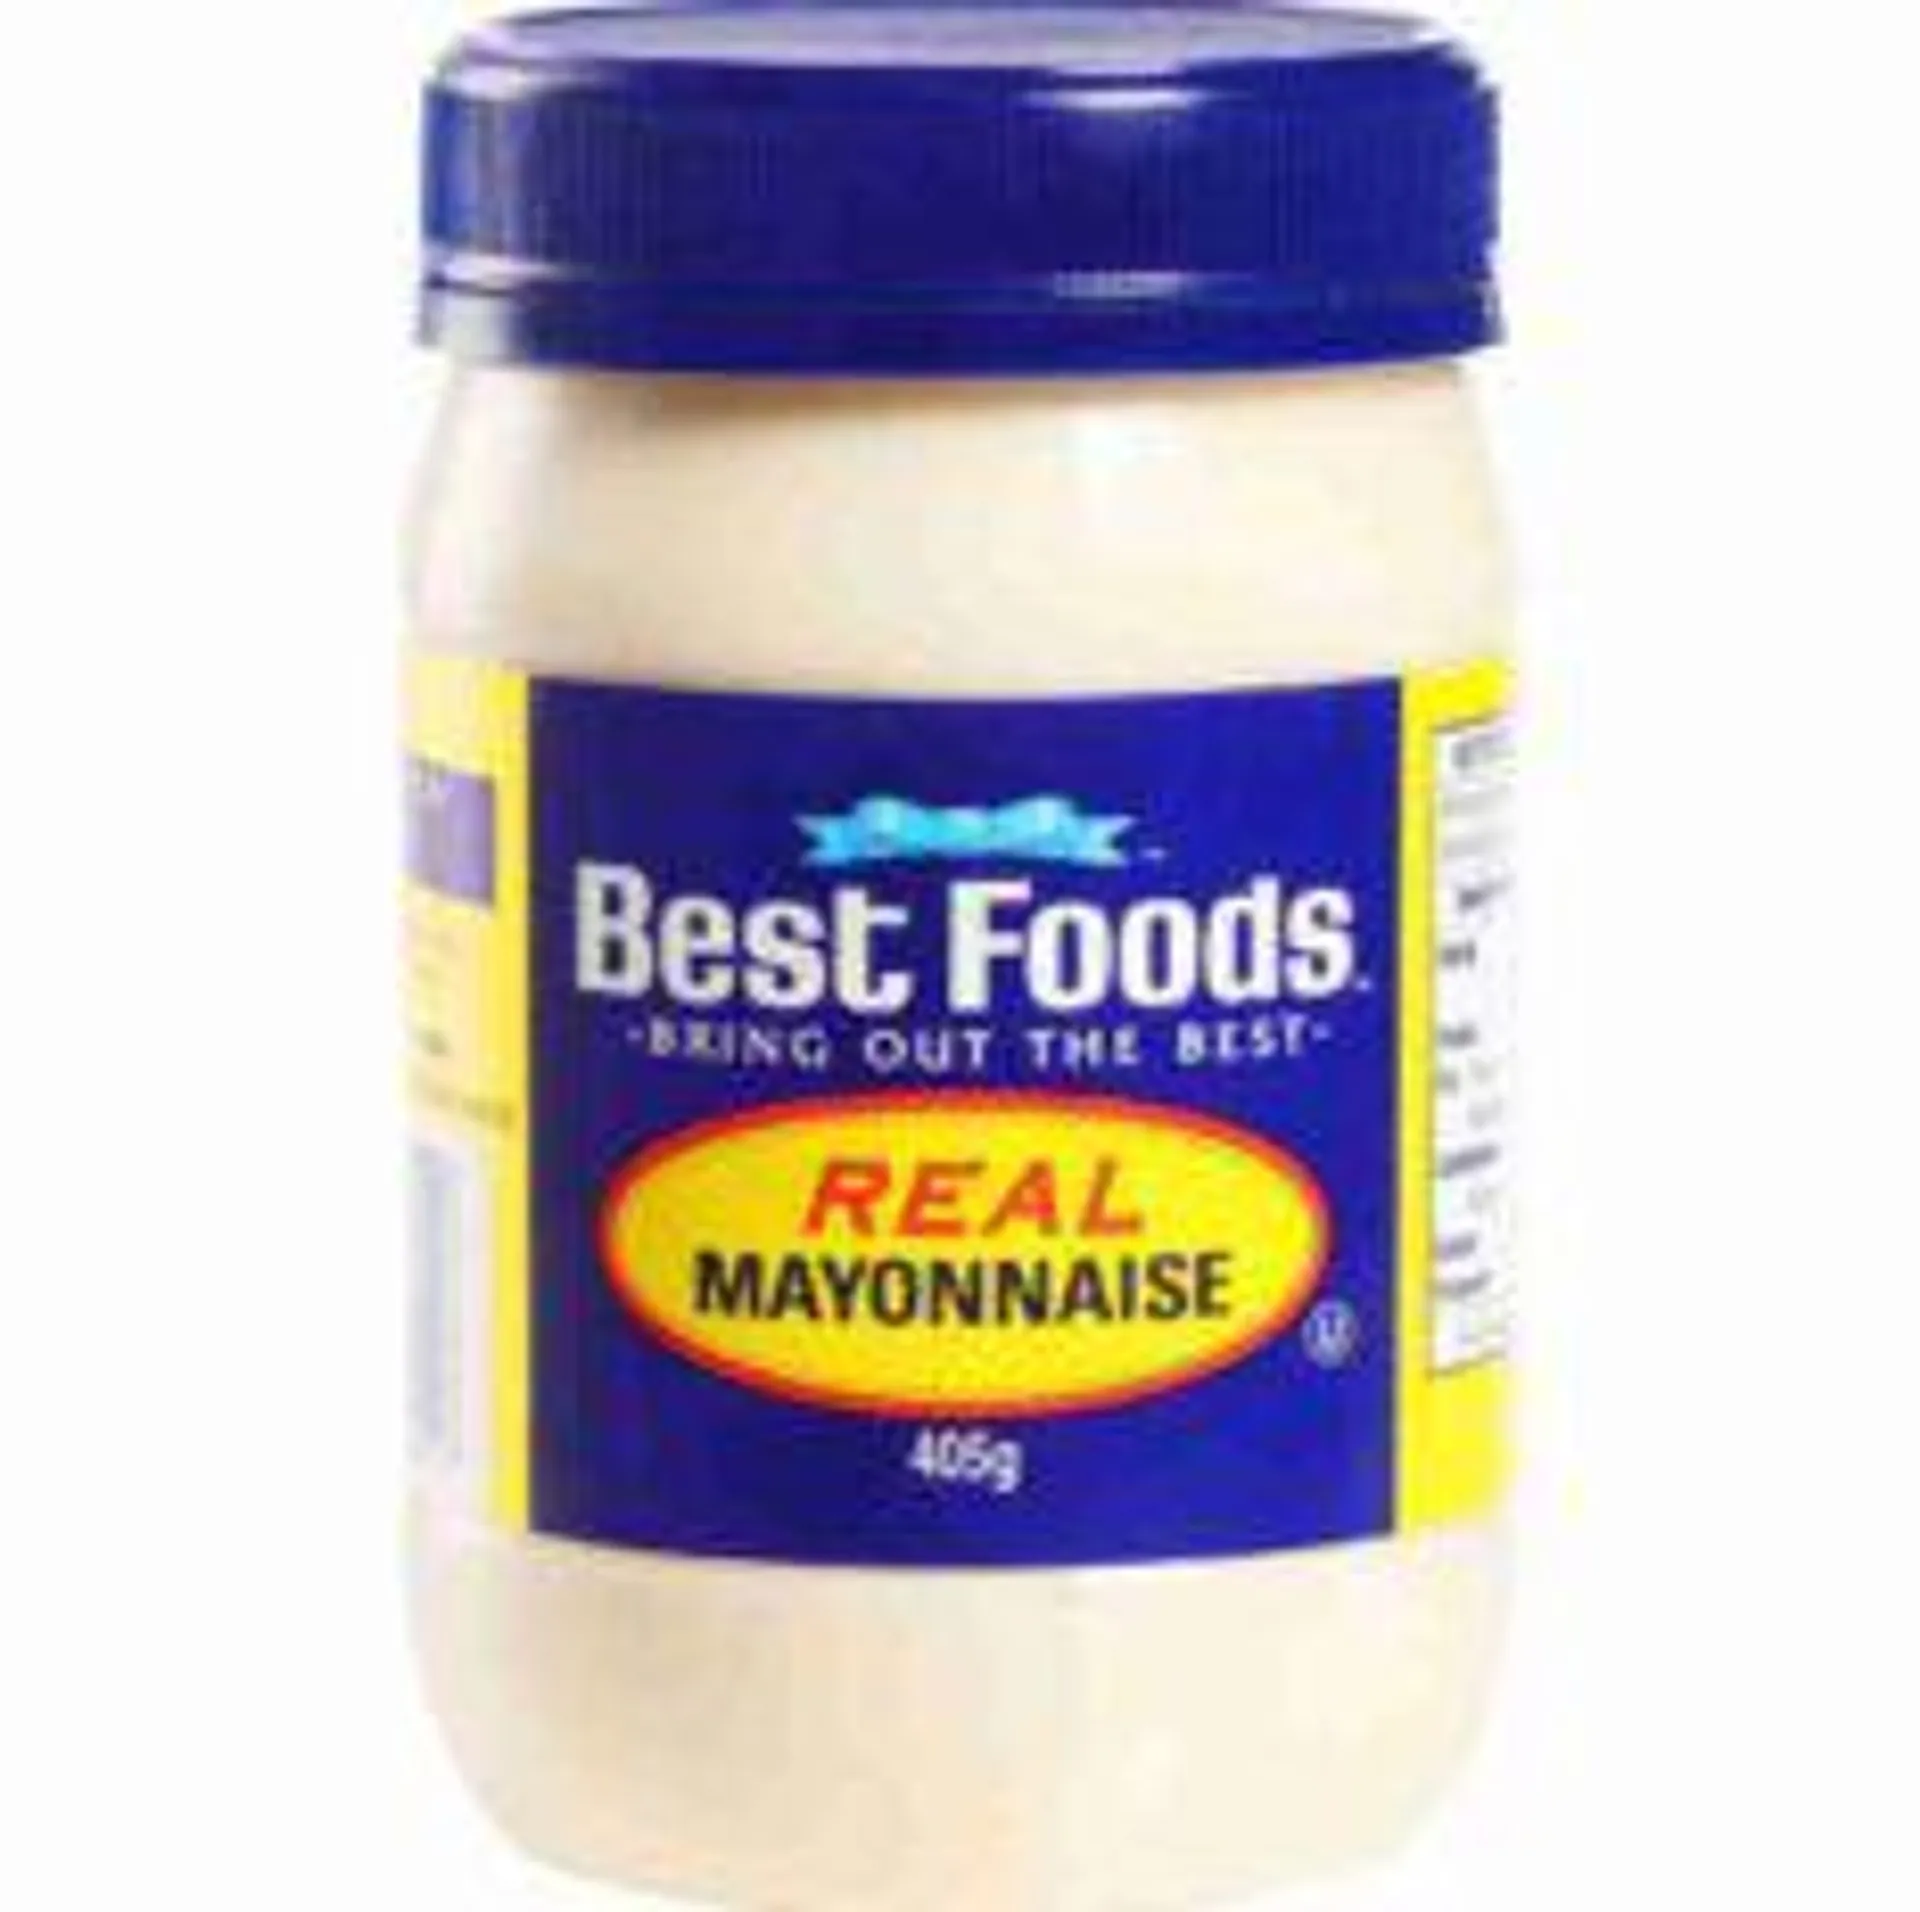 Best foods mayonnaise 405g jar